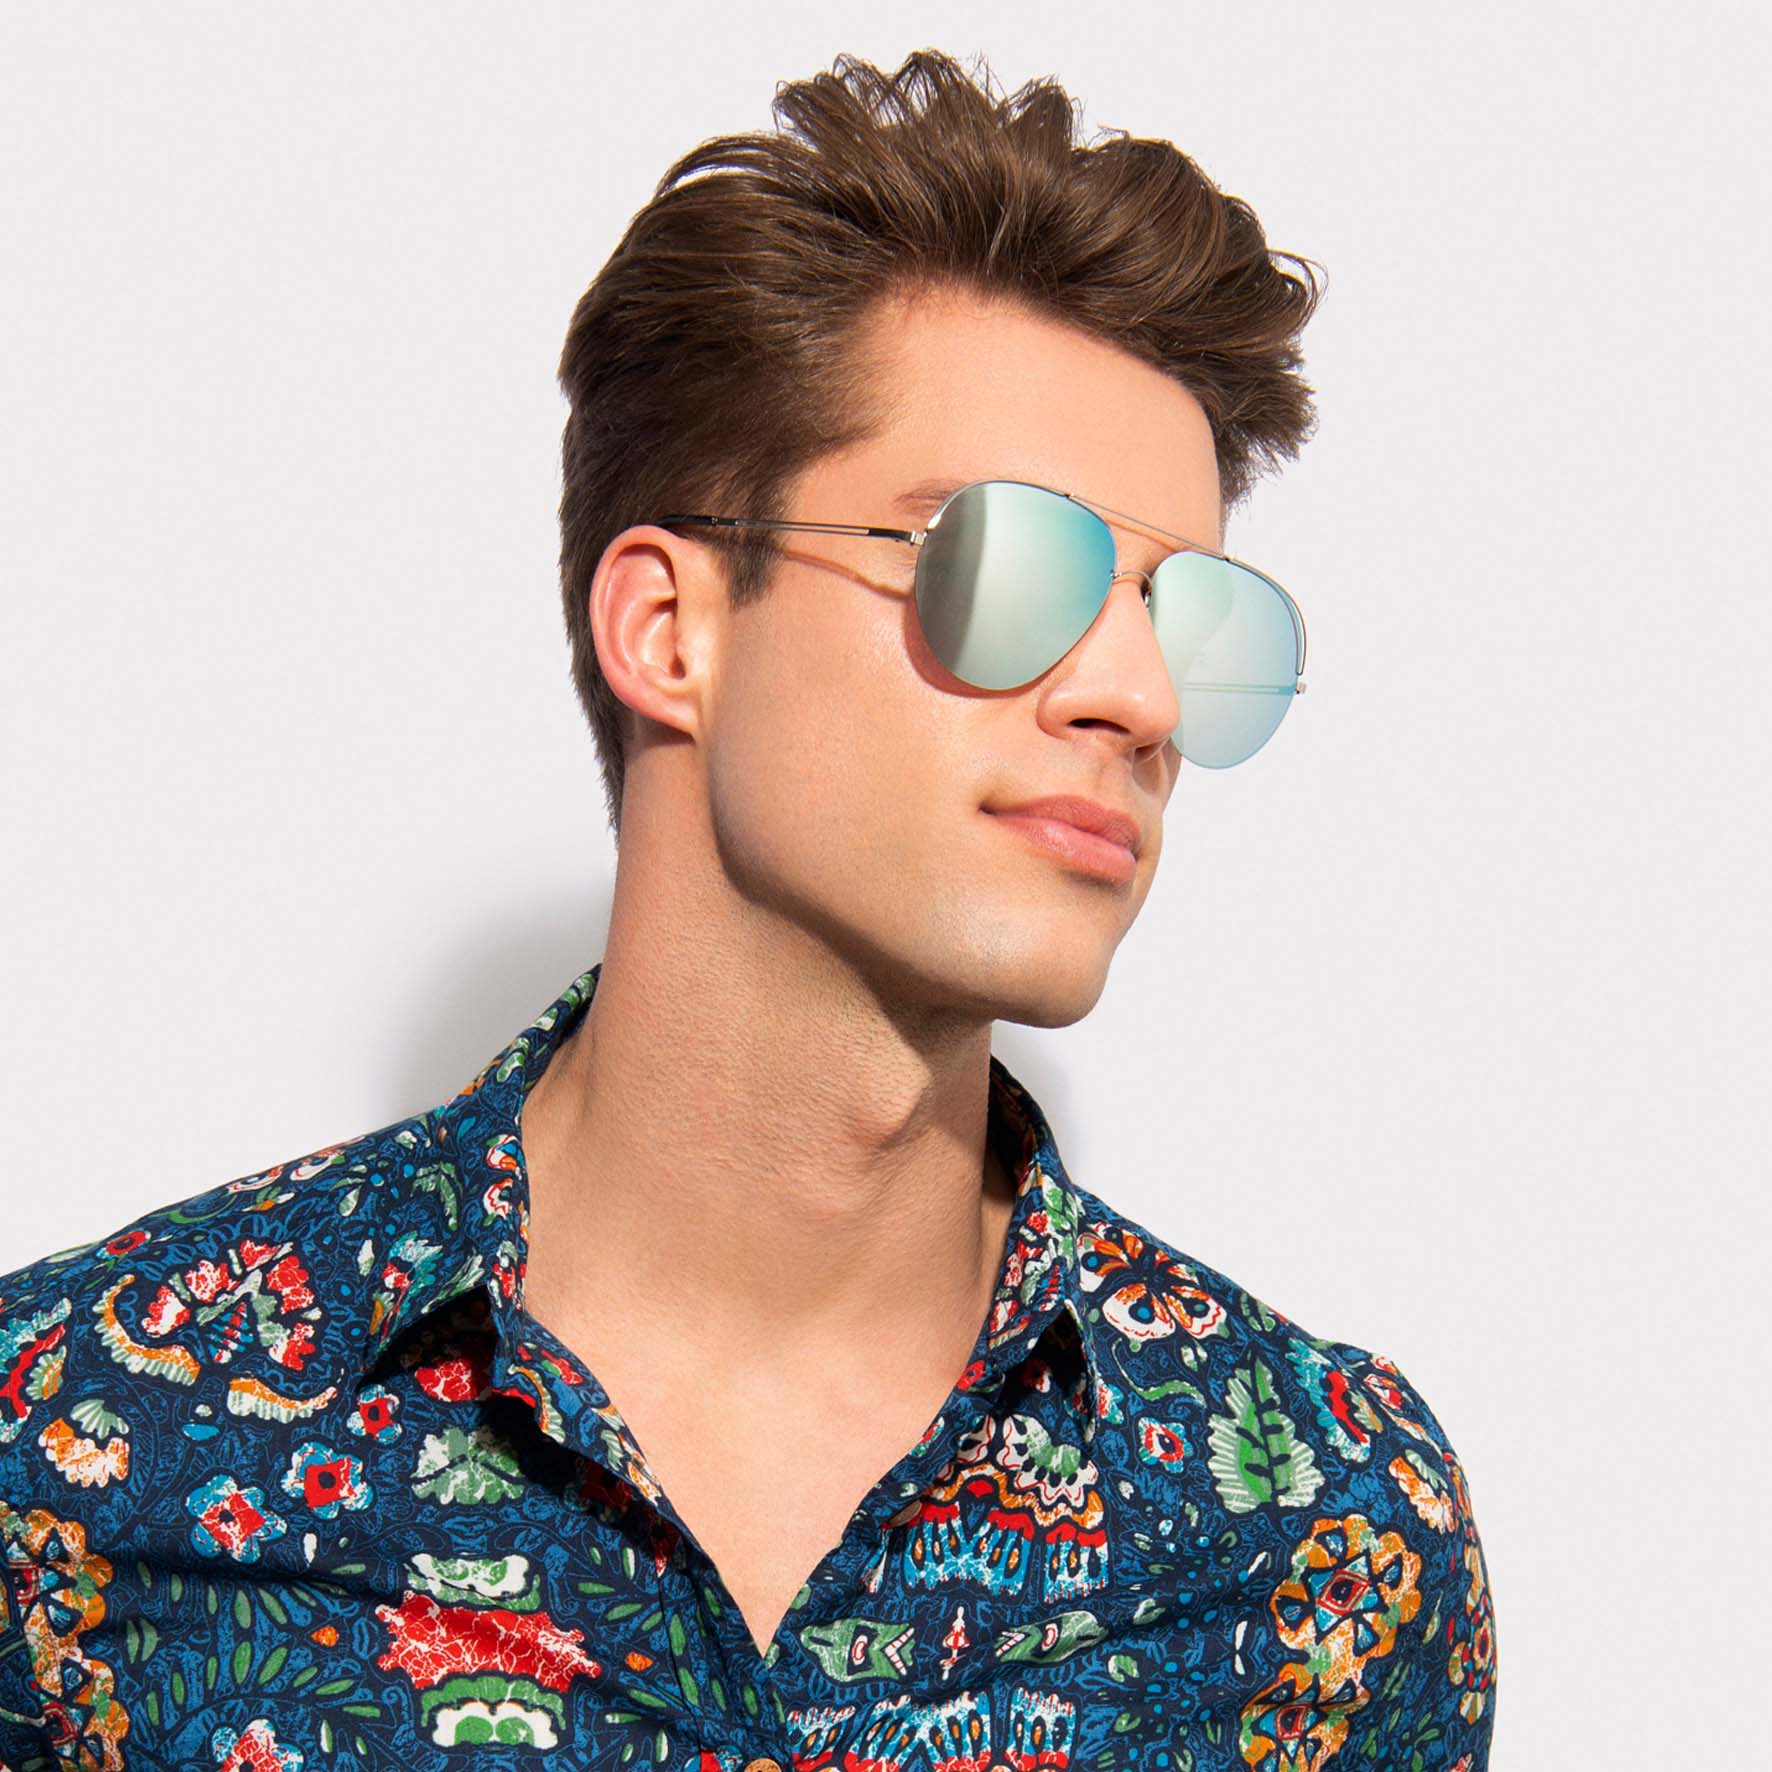 ZERO 17 Baby Blue Mirror - Luxury Sunglasses, Designer Sunglasses